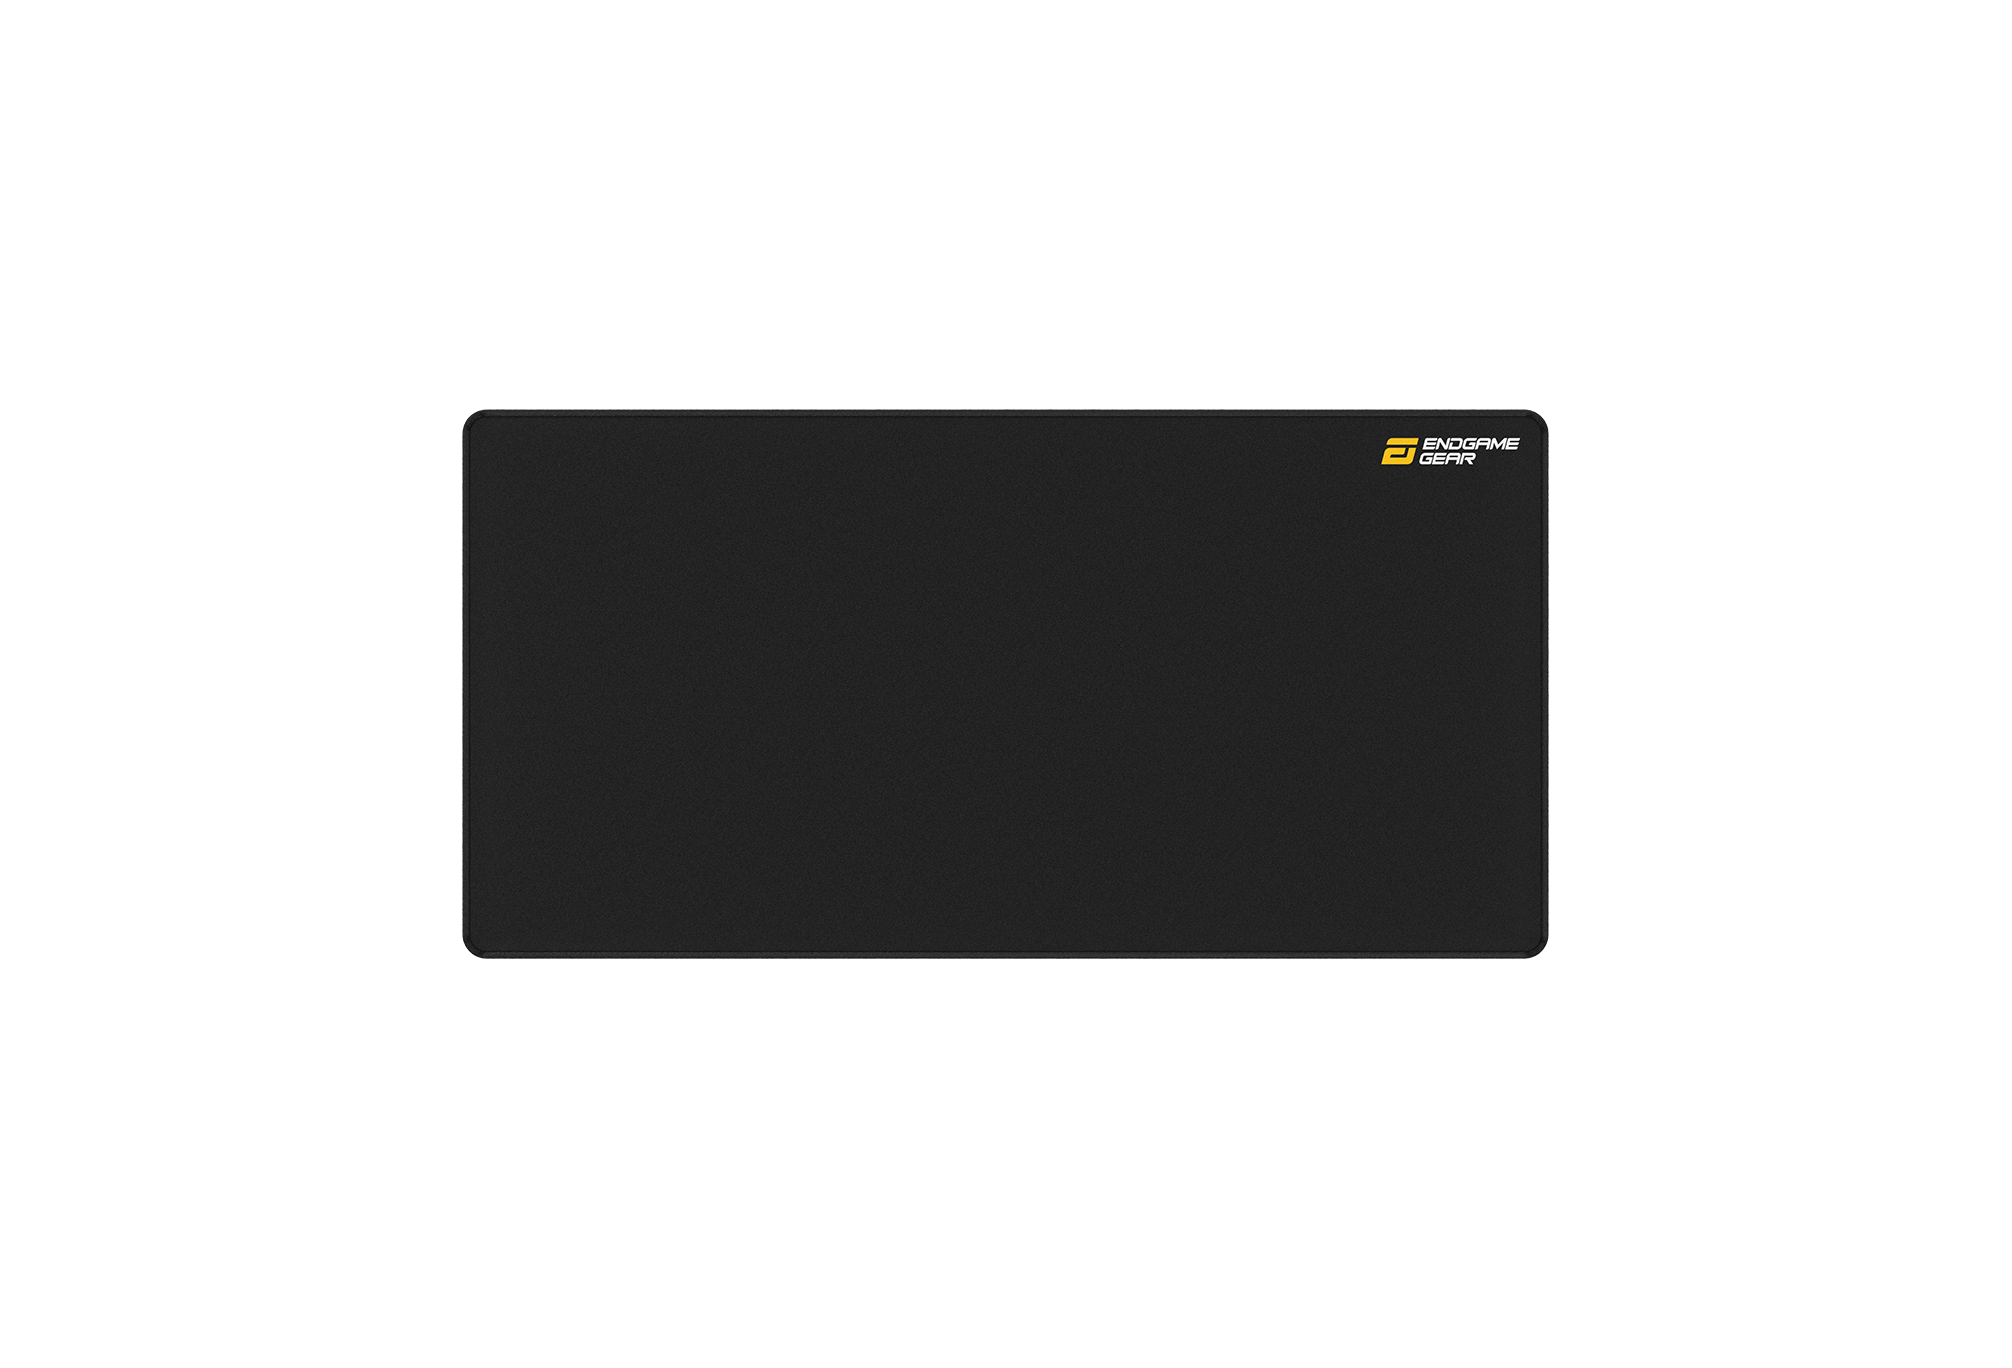 Endgamegear - MPJ890 Tapis de souris  Black